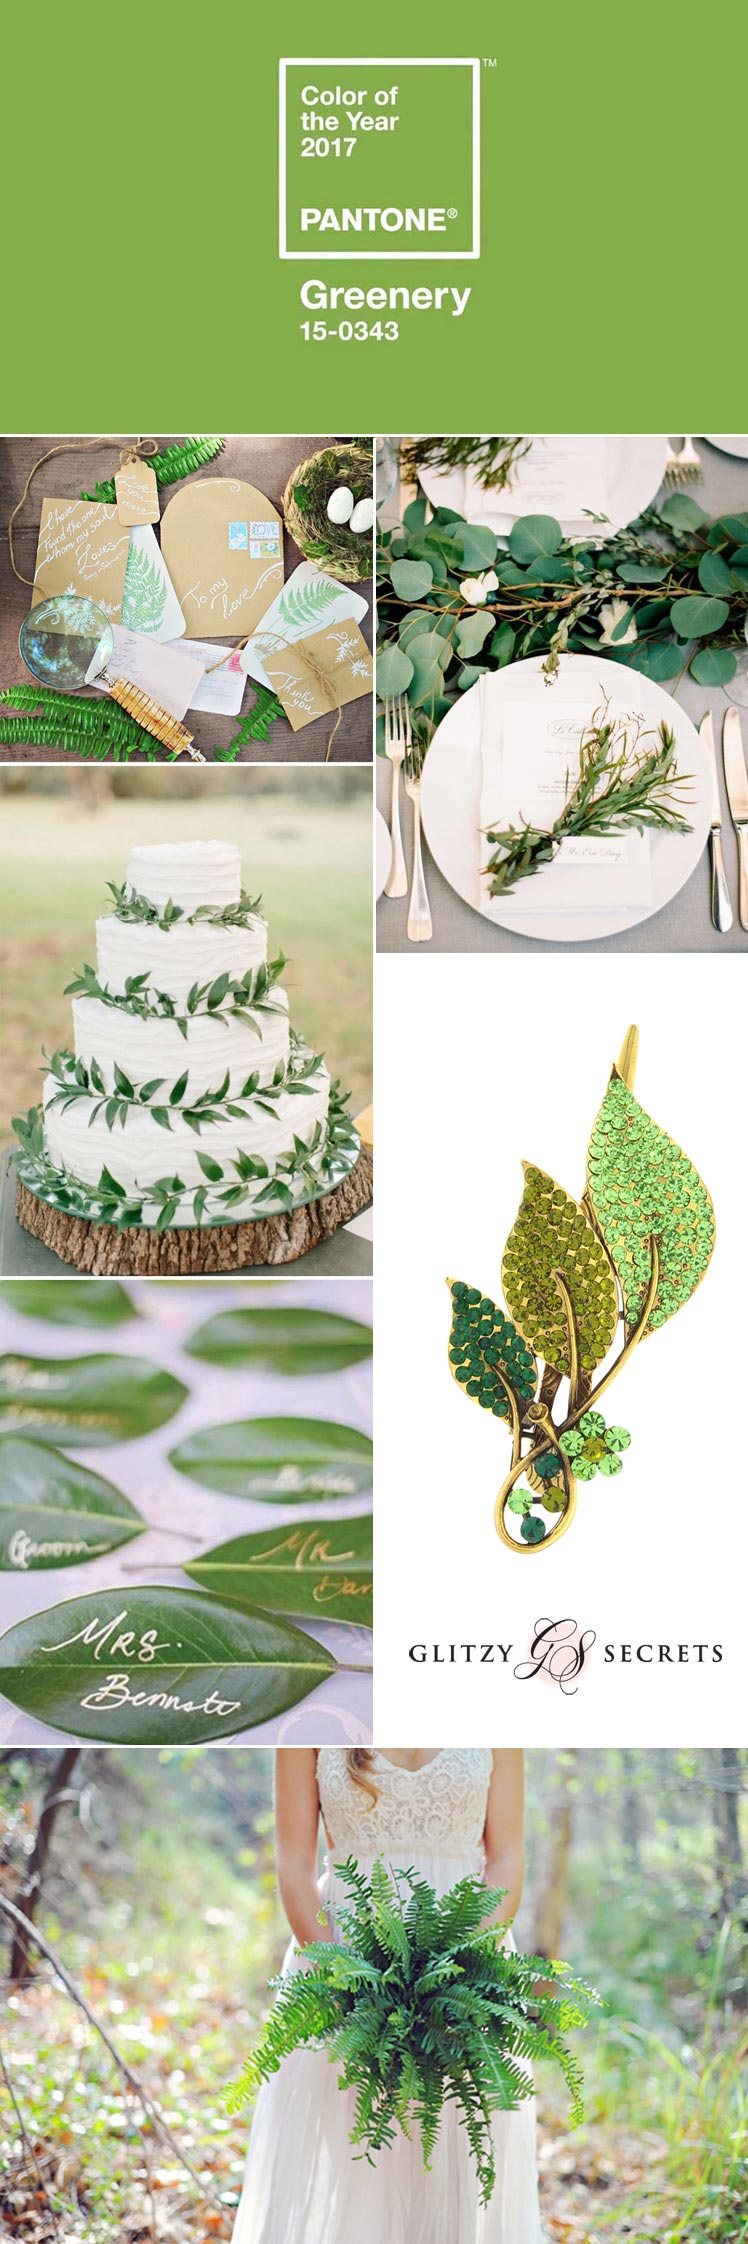 Pantone Greenery wedding colour scheme ideas